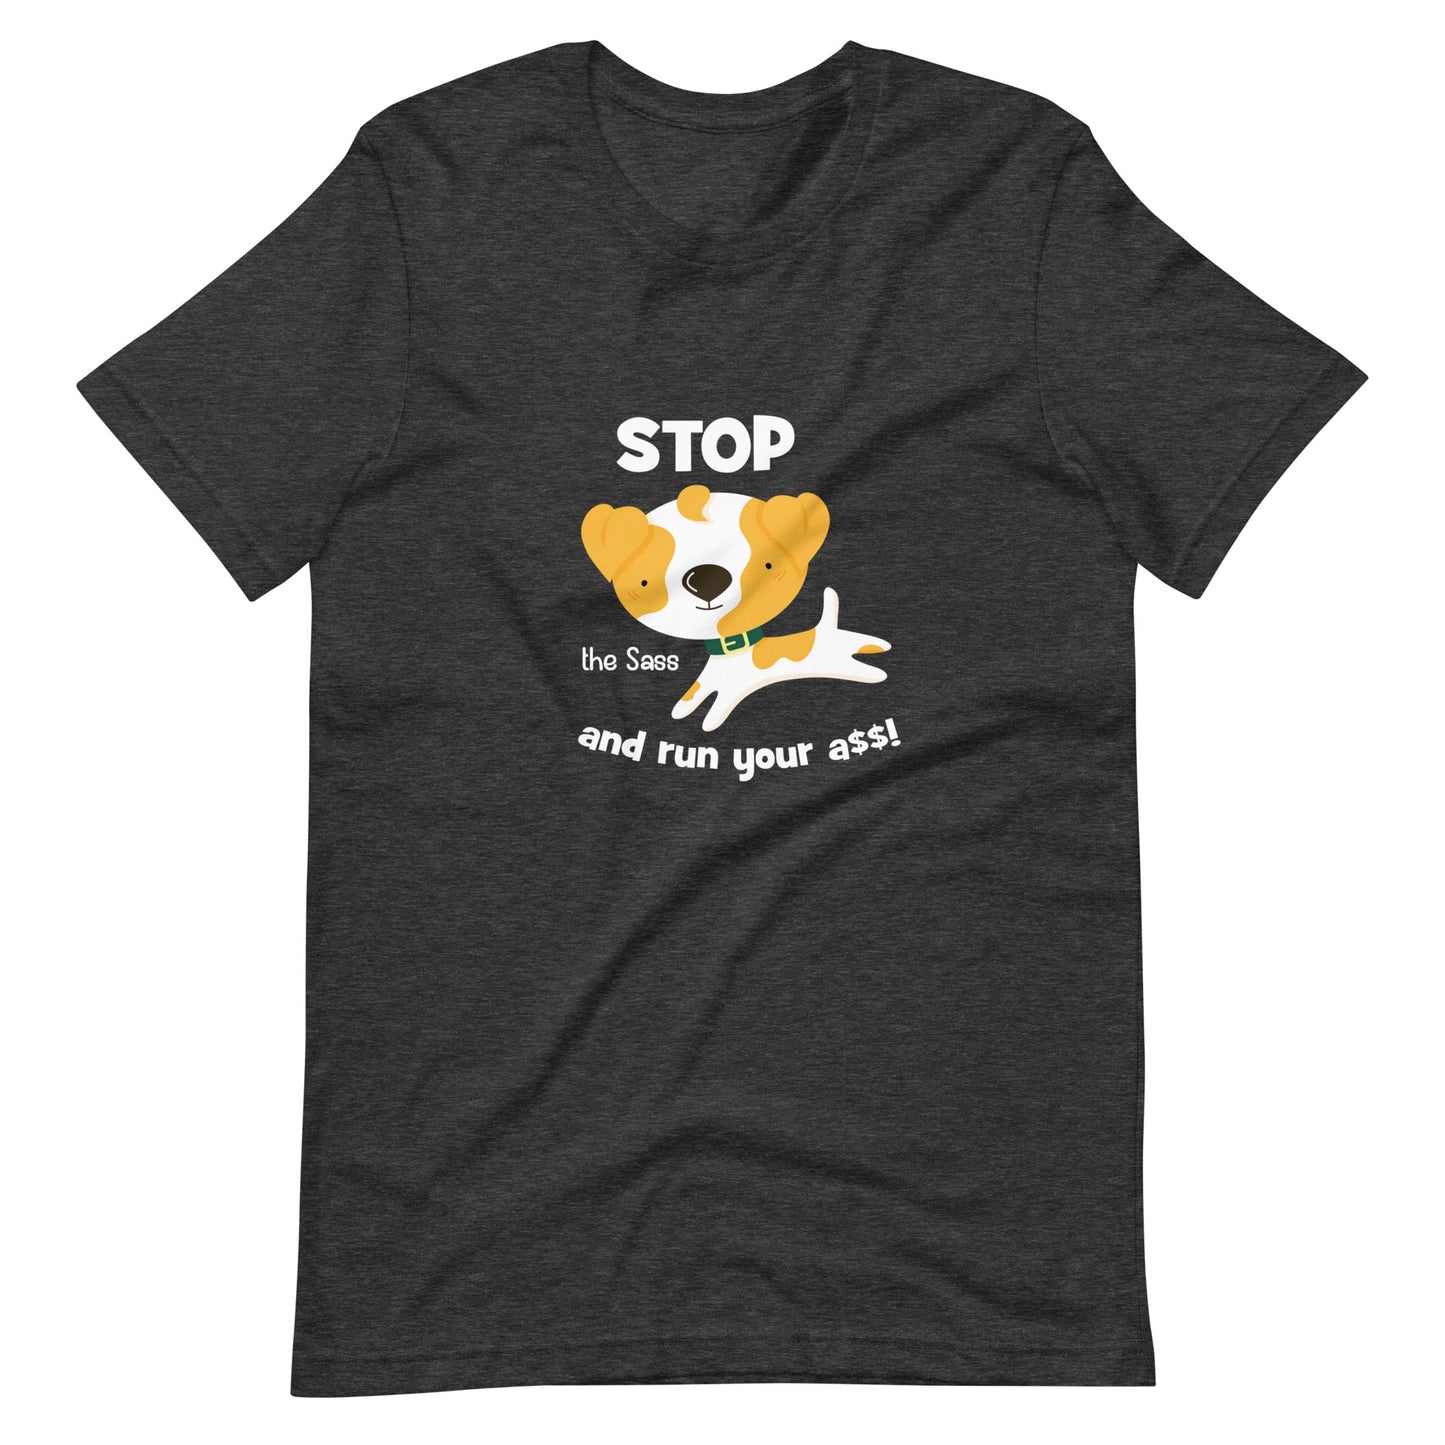 STOP THE SASS - 1 Unisex t-shirt